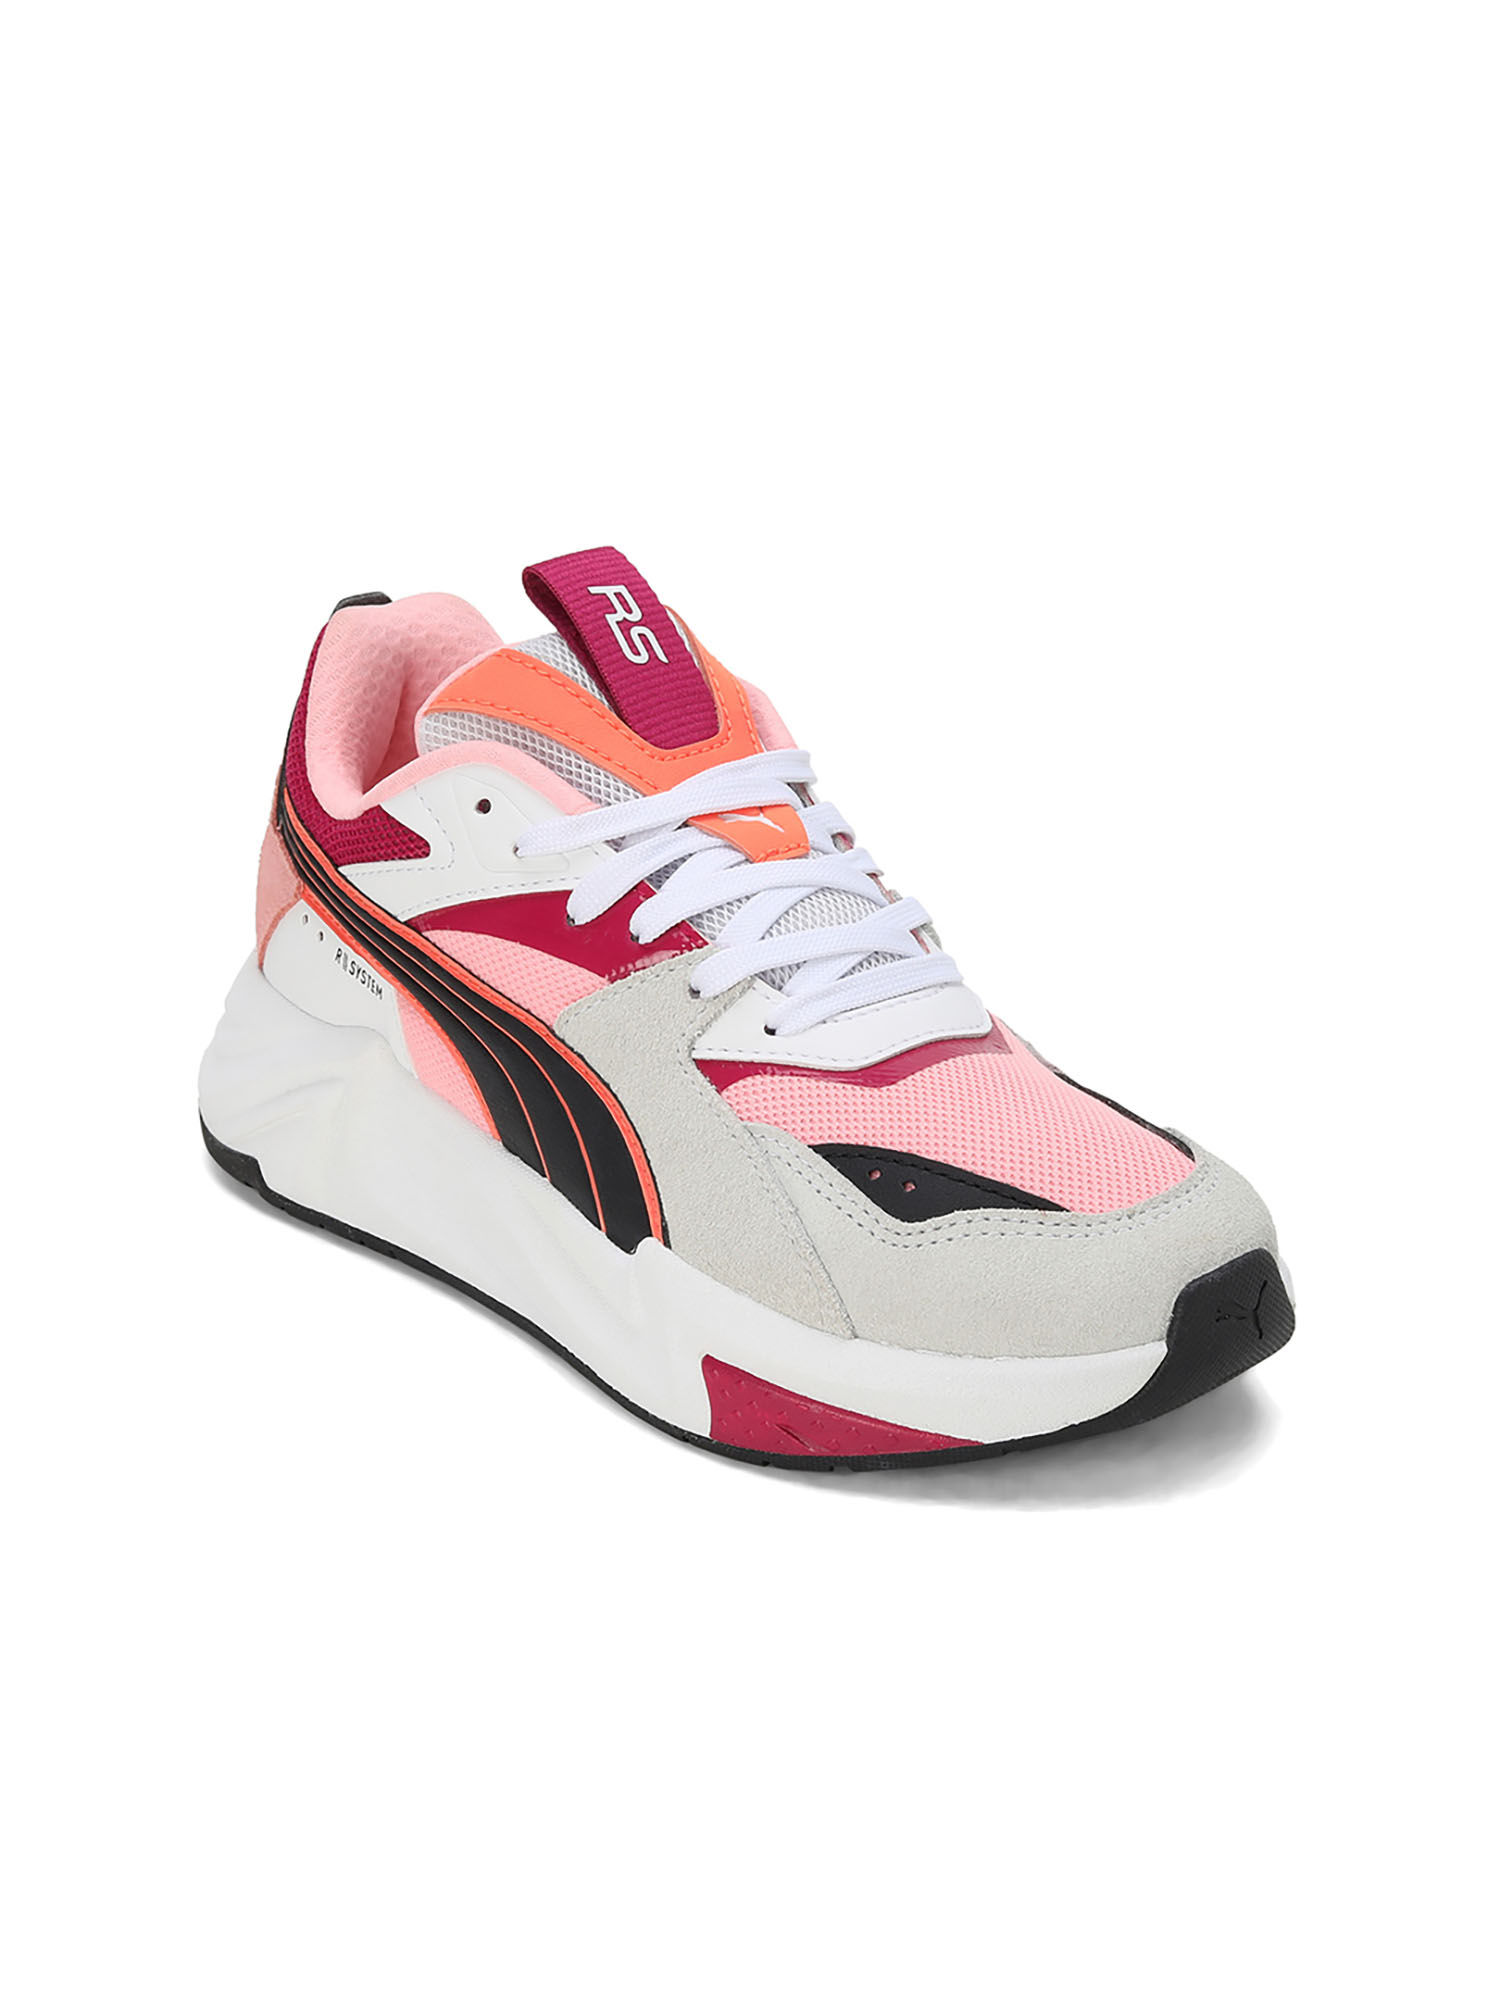 Puma Boys Future Rider Play Sneakers 372349-01 Casual Shoes Multicolor Size  5C | eBay